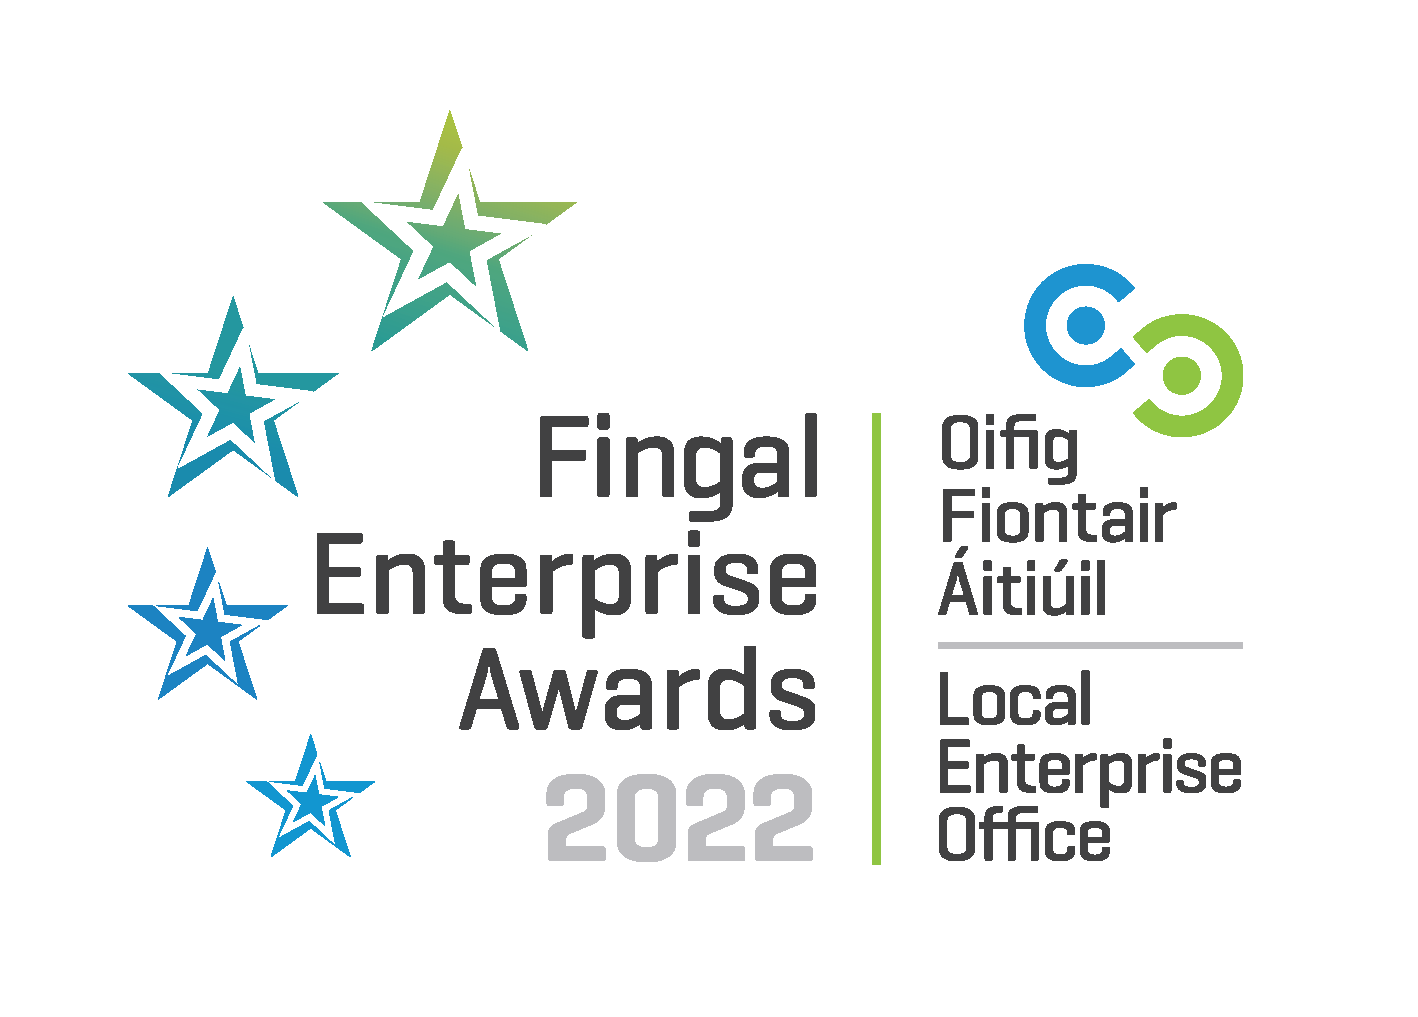 Fingal Enterprise Awards 2022